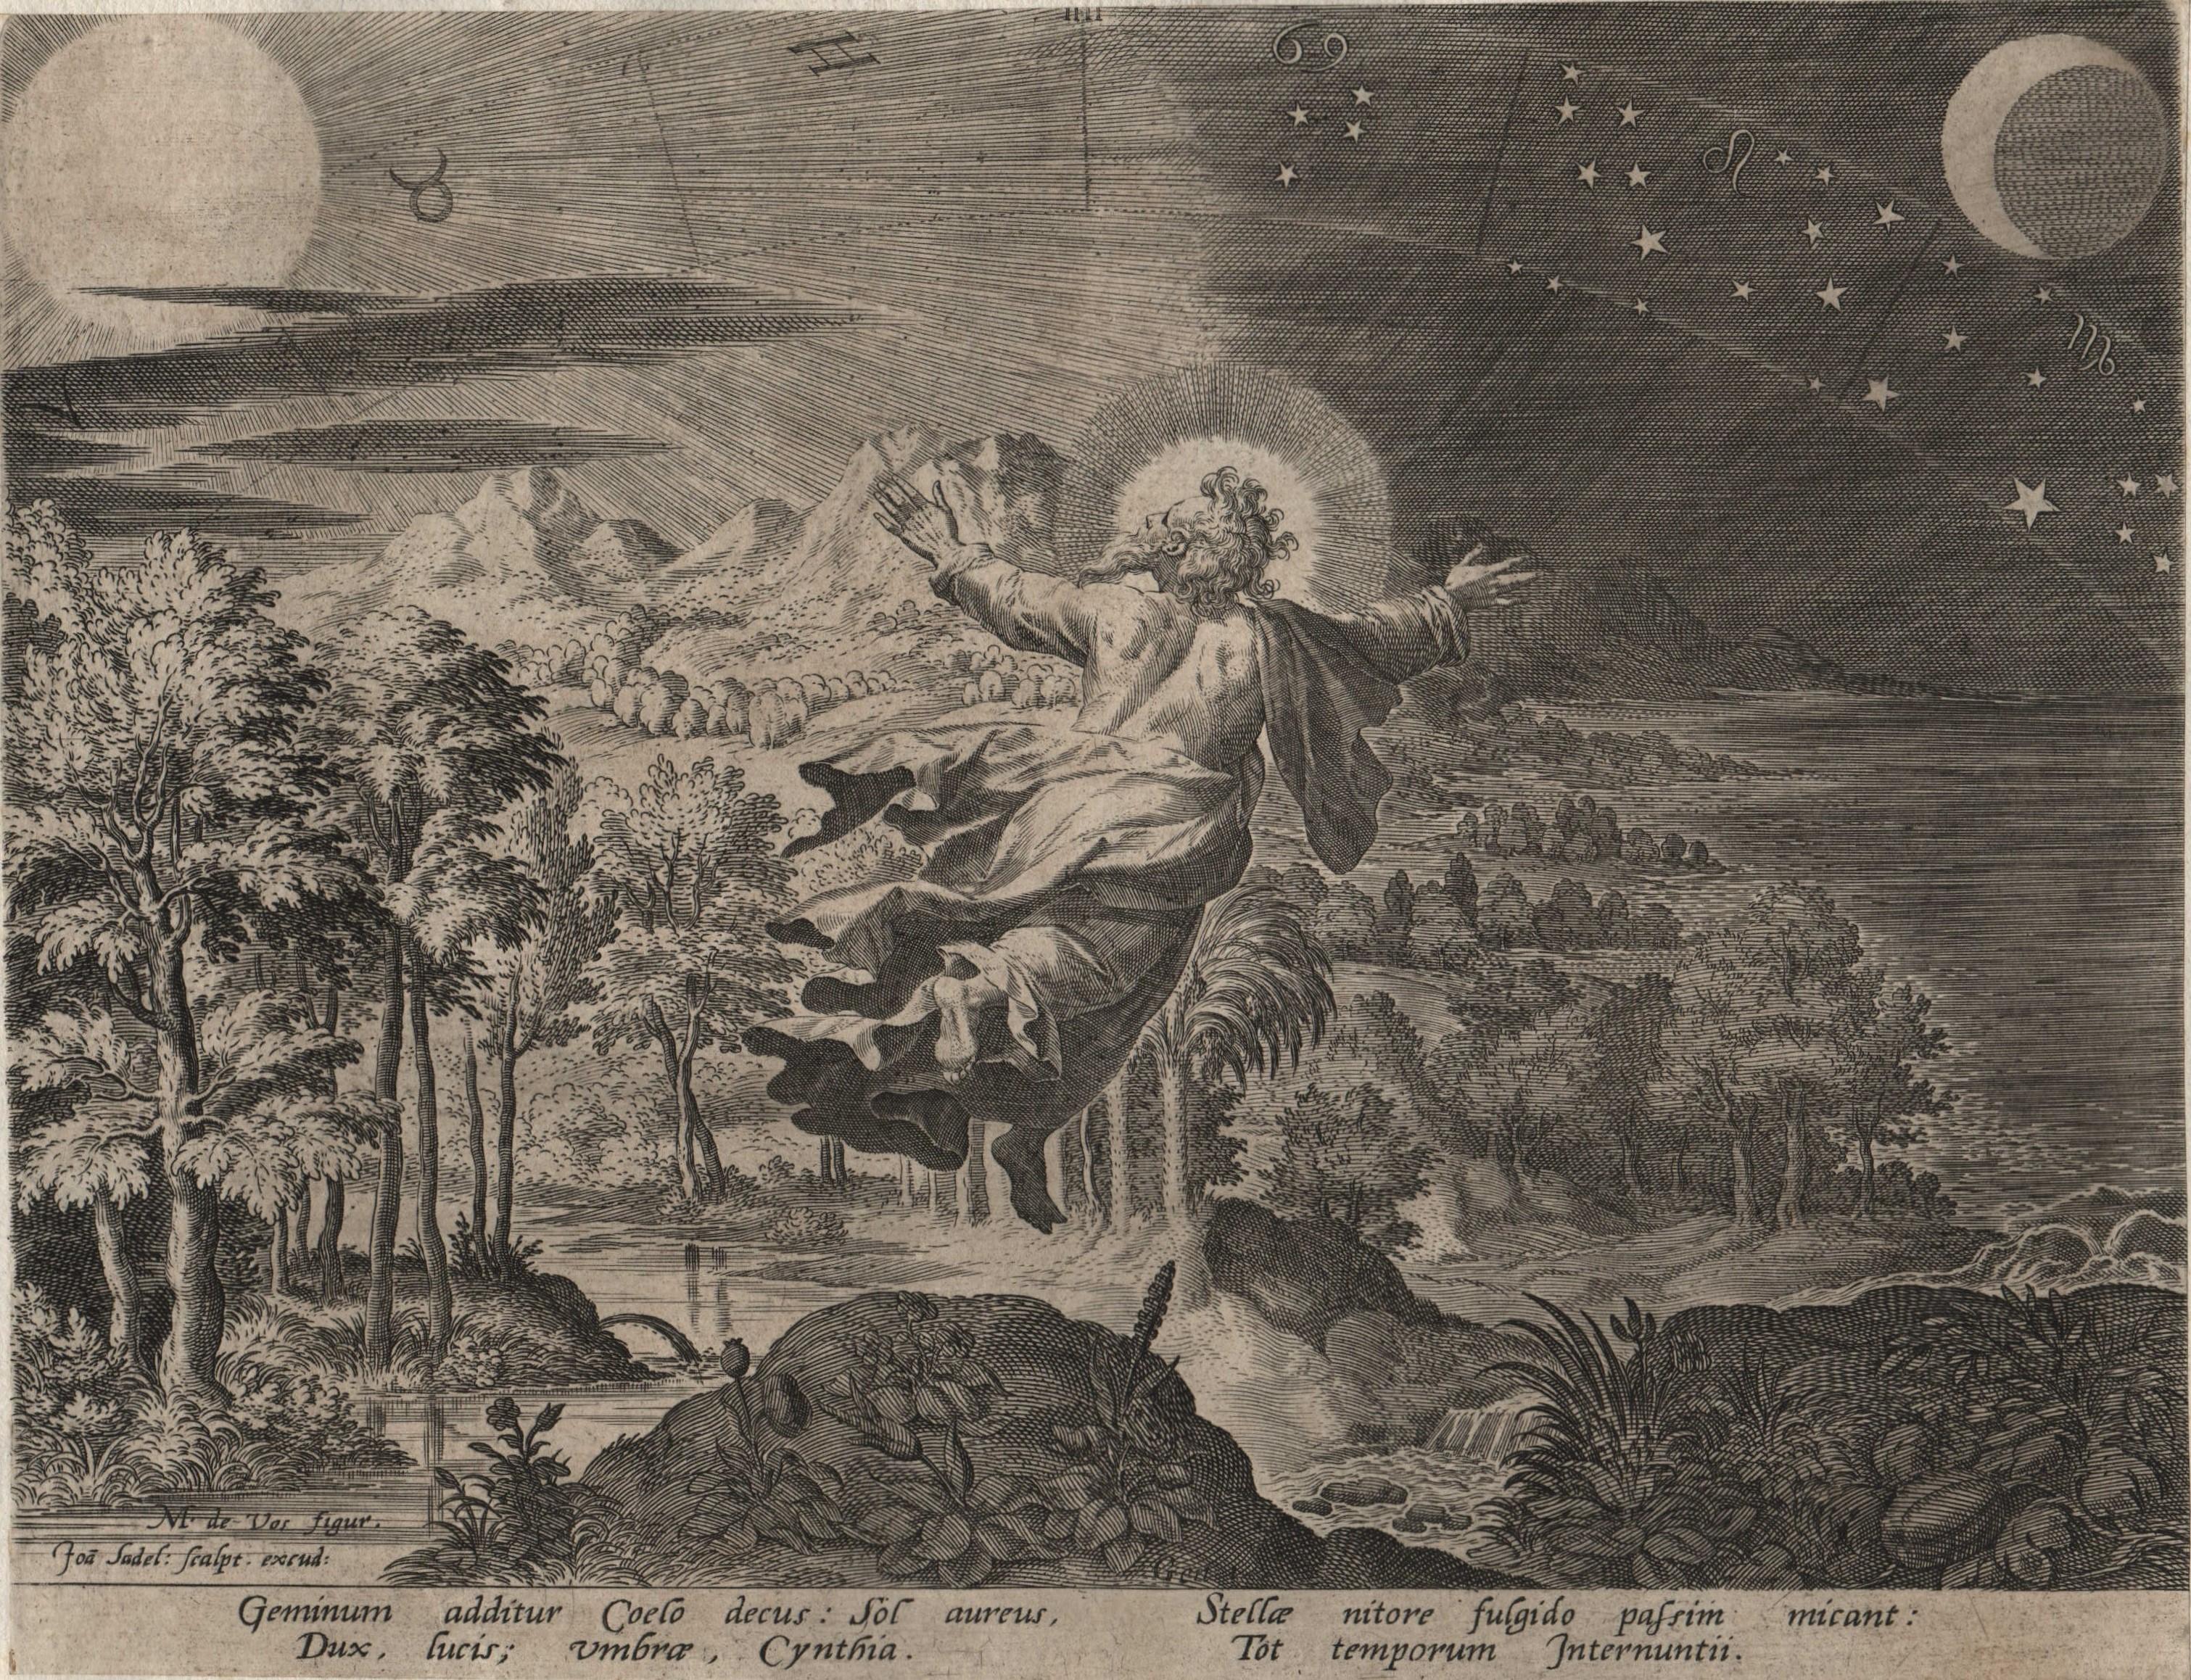 Creation! Sun, Moon, Stars - Framed 1584 Old Master Engraving Religious Bible - Print by Johannes Sadeler I